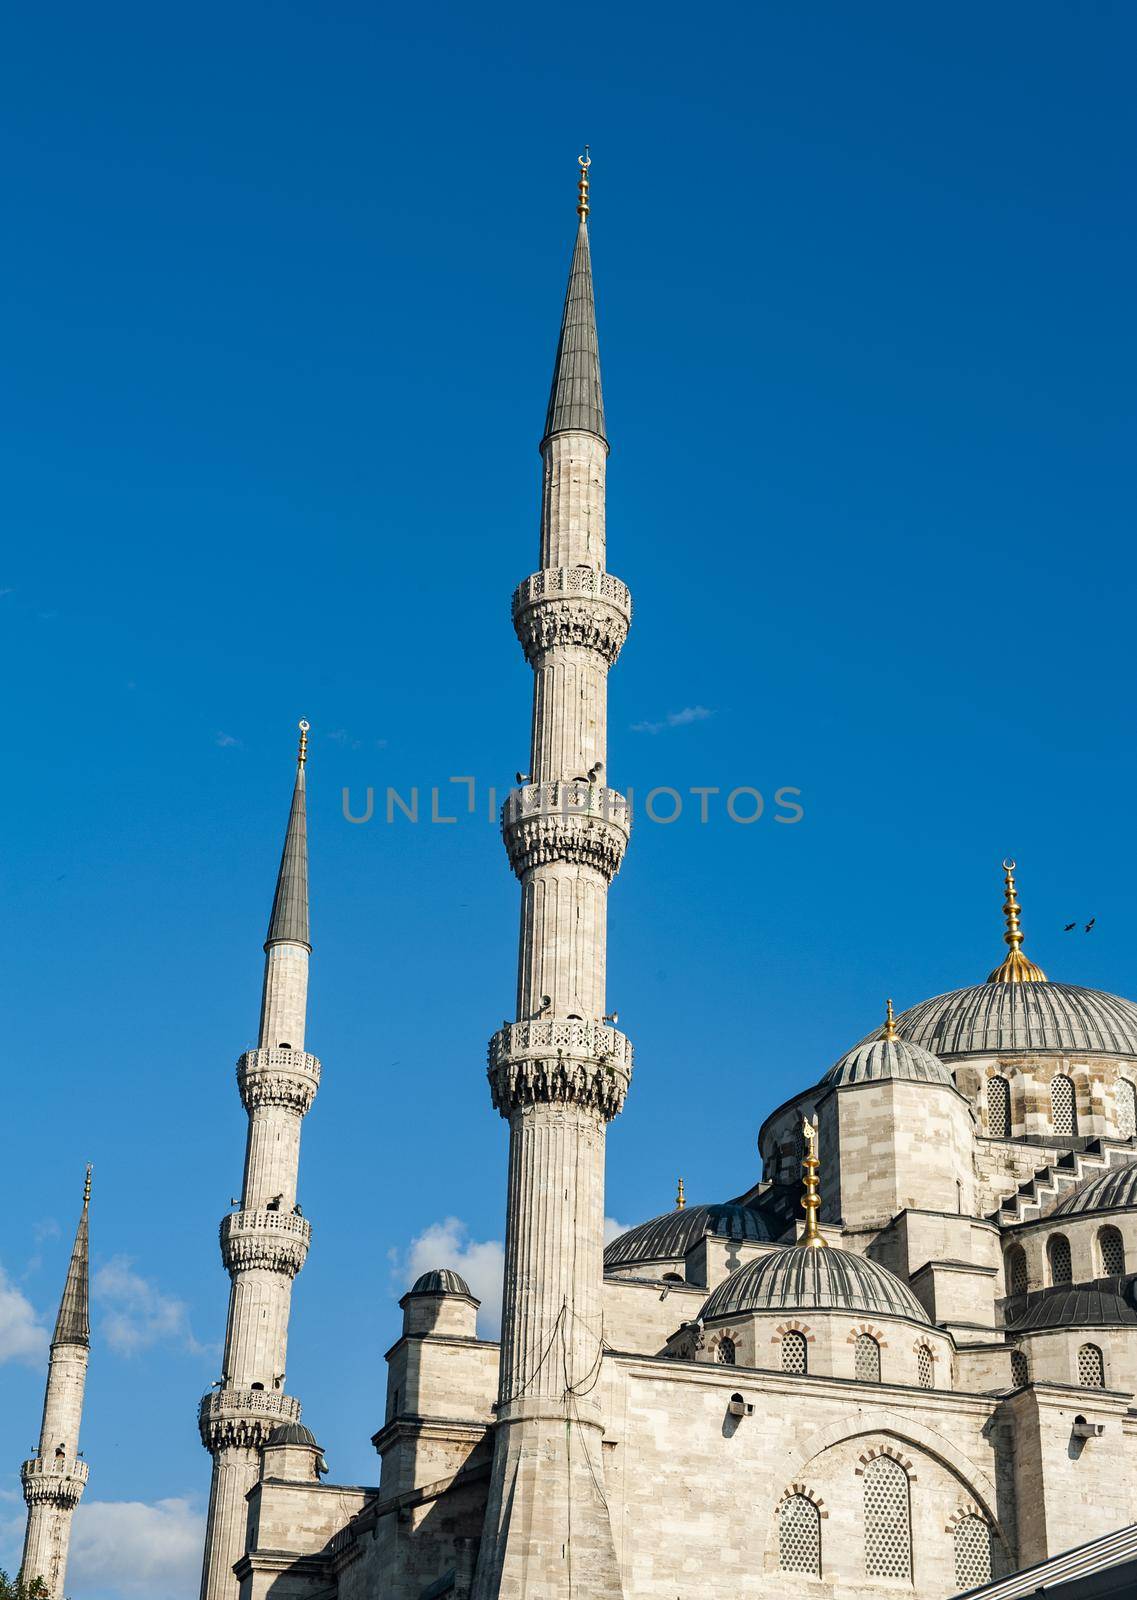 Suleymaniye Mosque in Istanbul in Turkey by fyletto